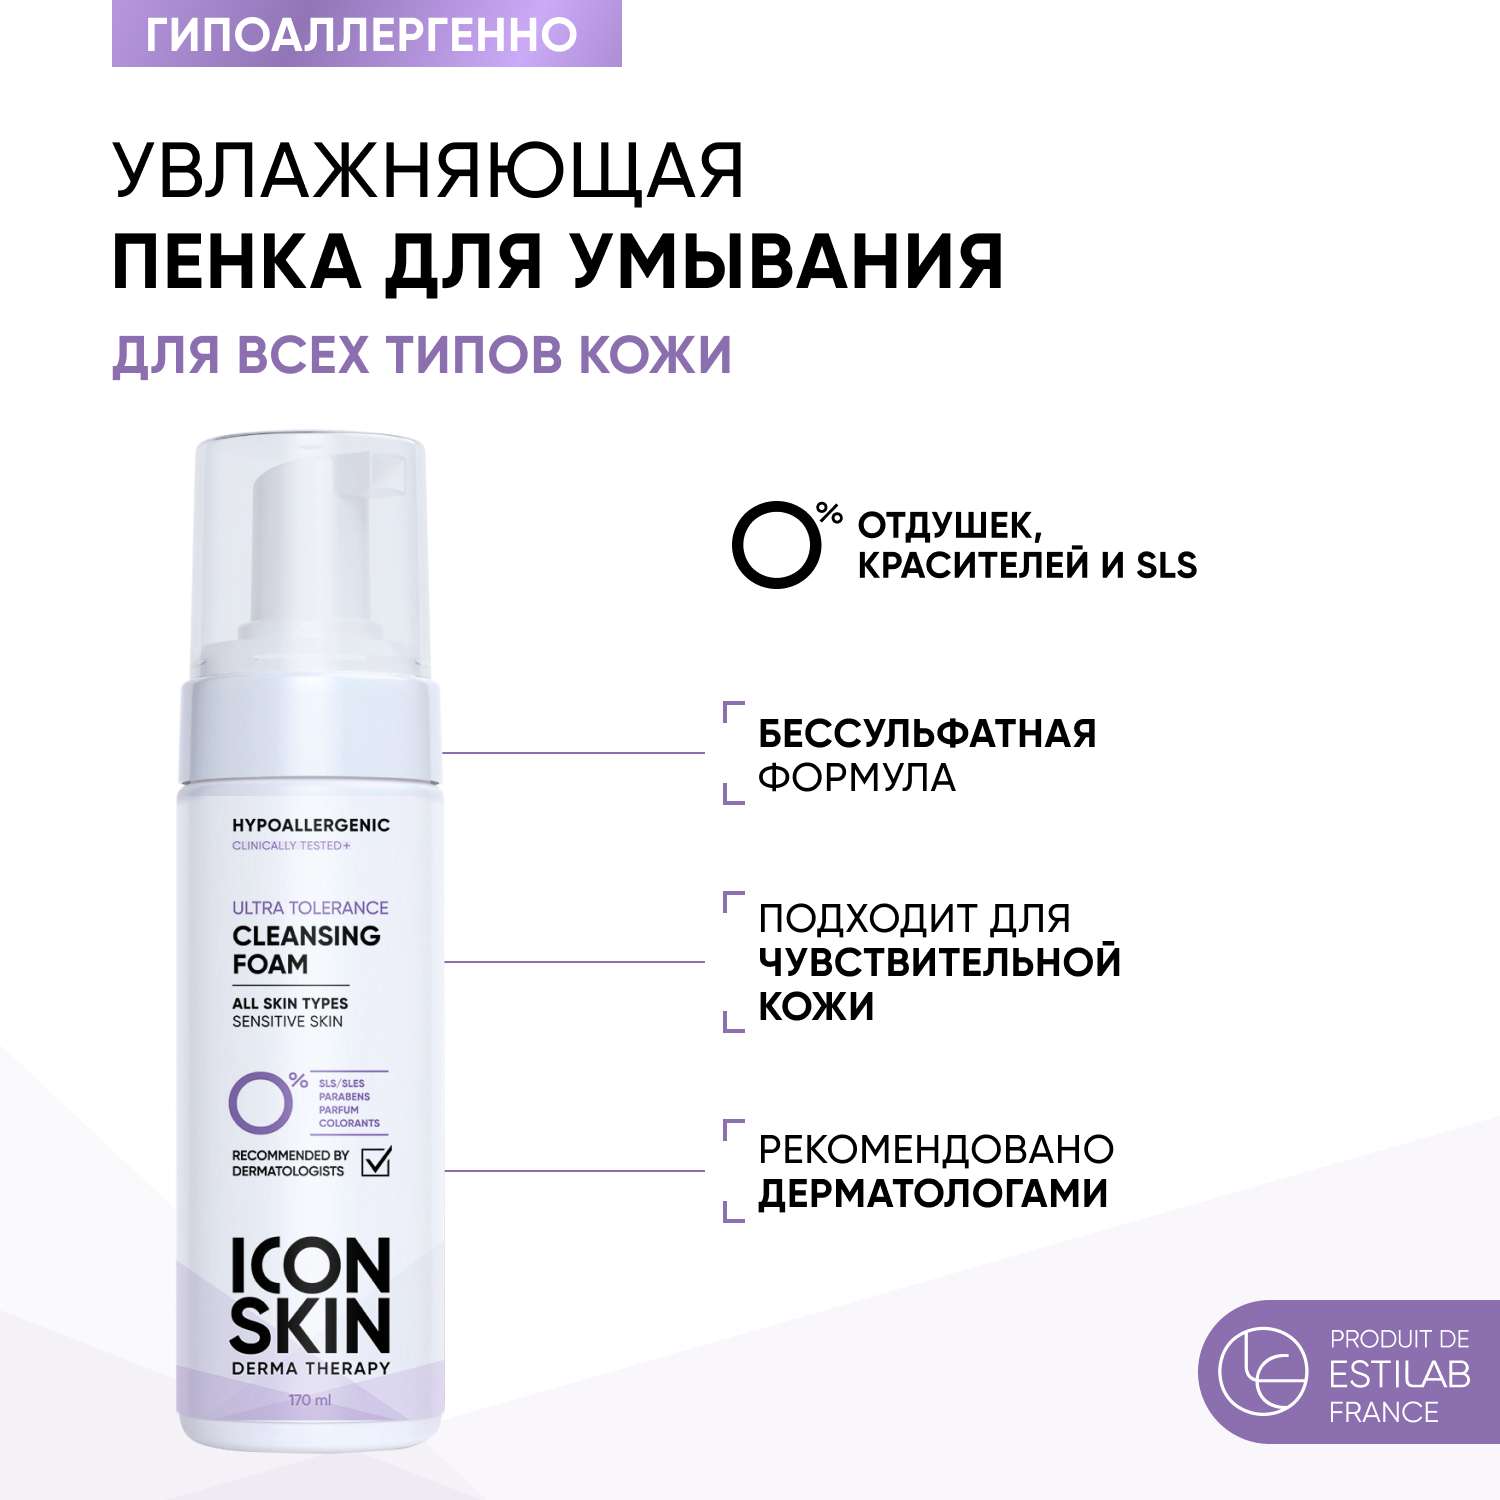 Пенка для умывания ICON SKIN для всех типов кожи Ultra Tolerance - фото 2